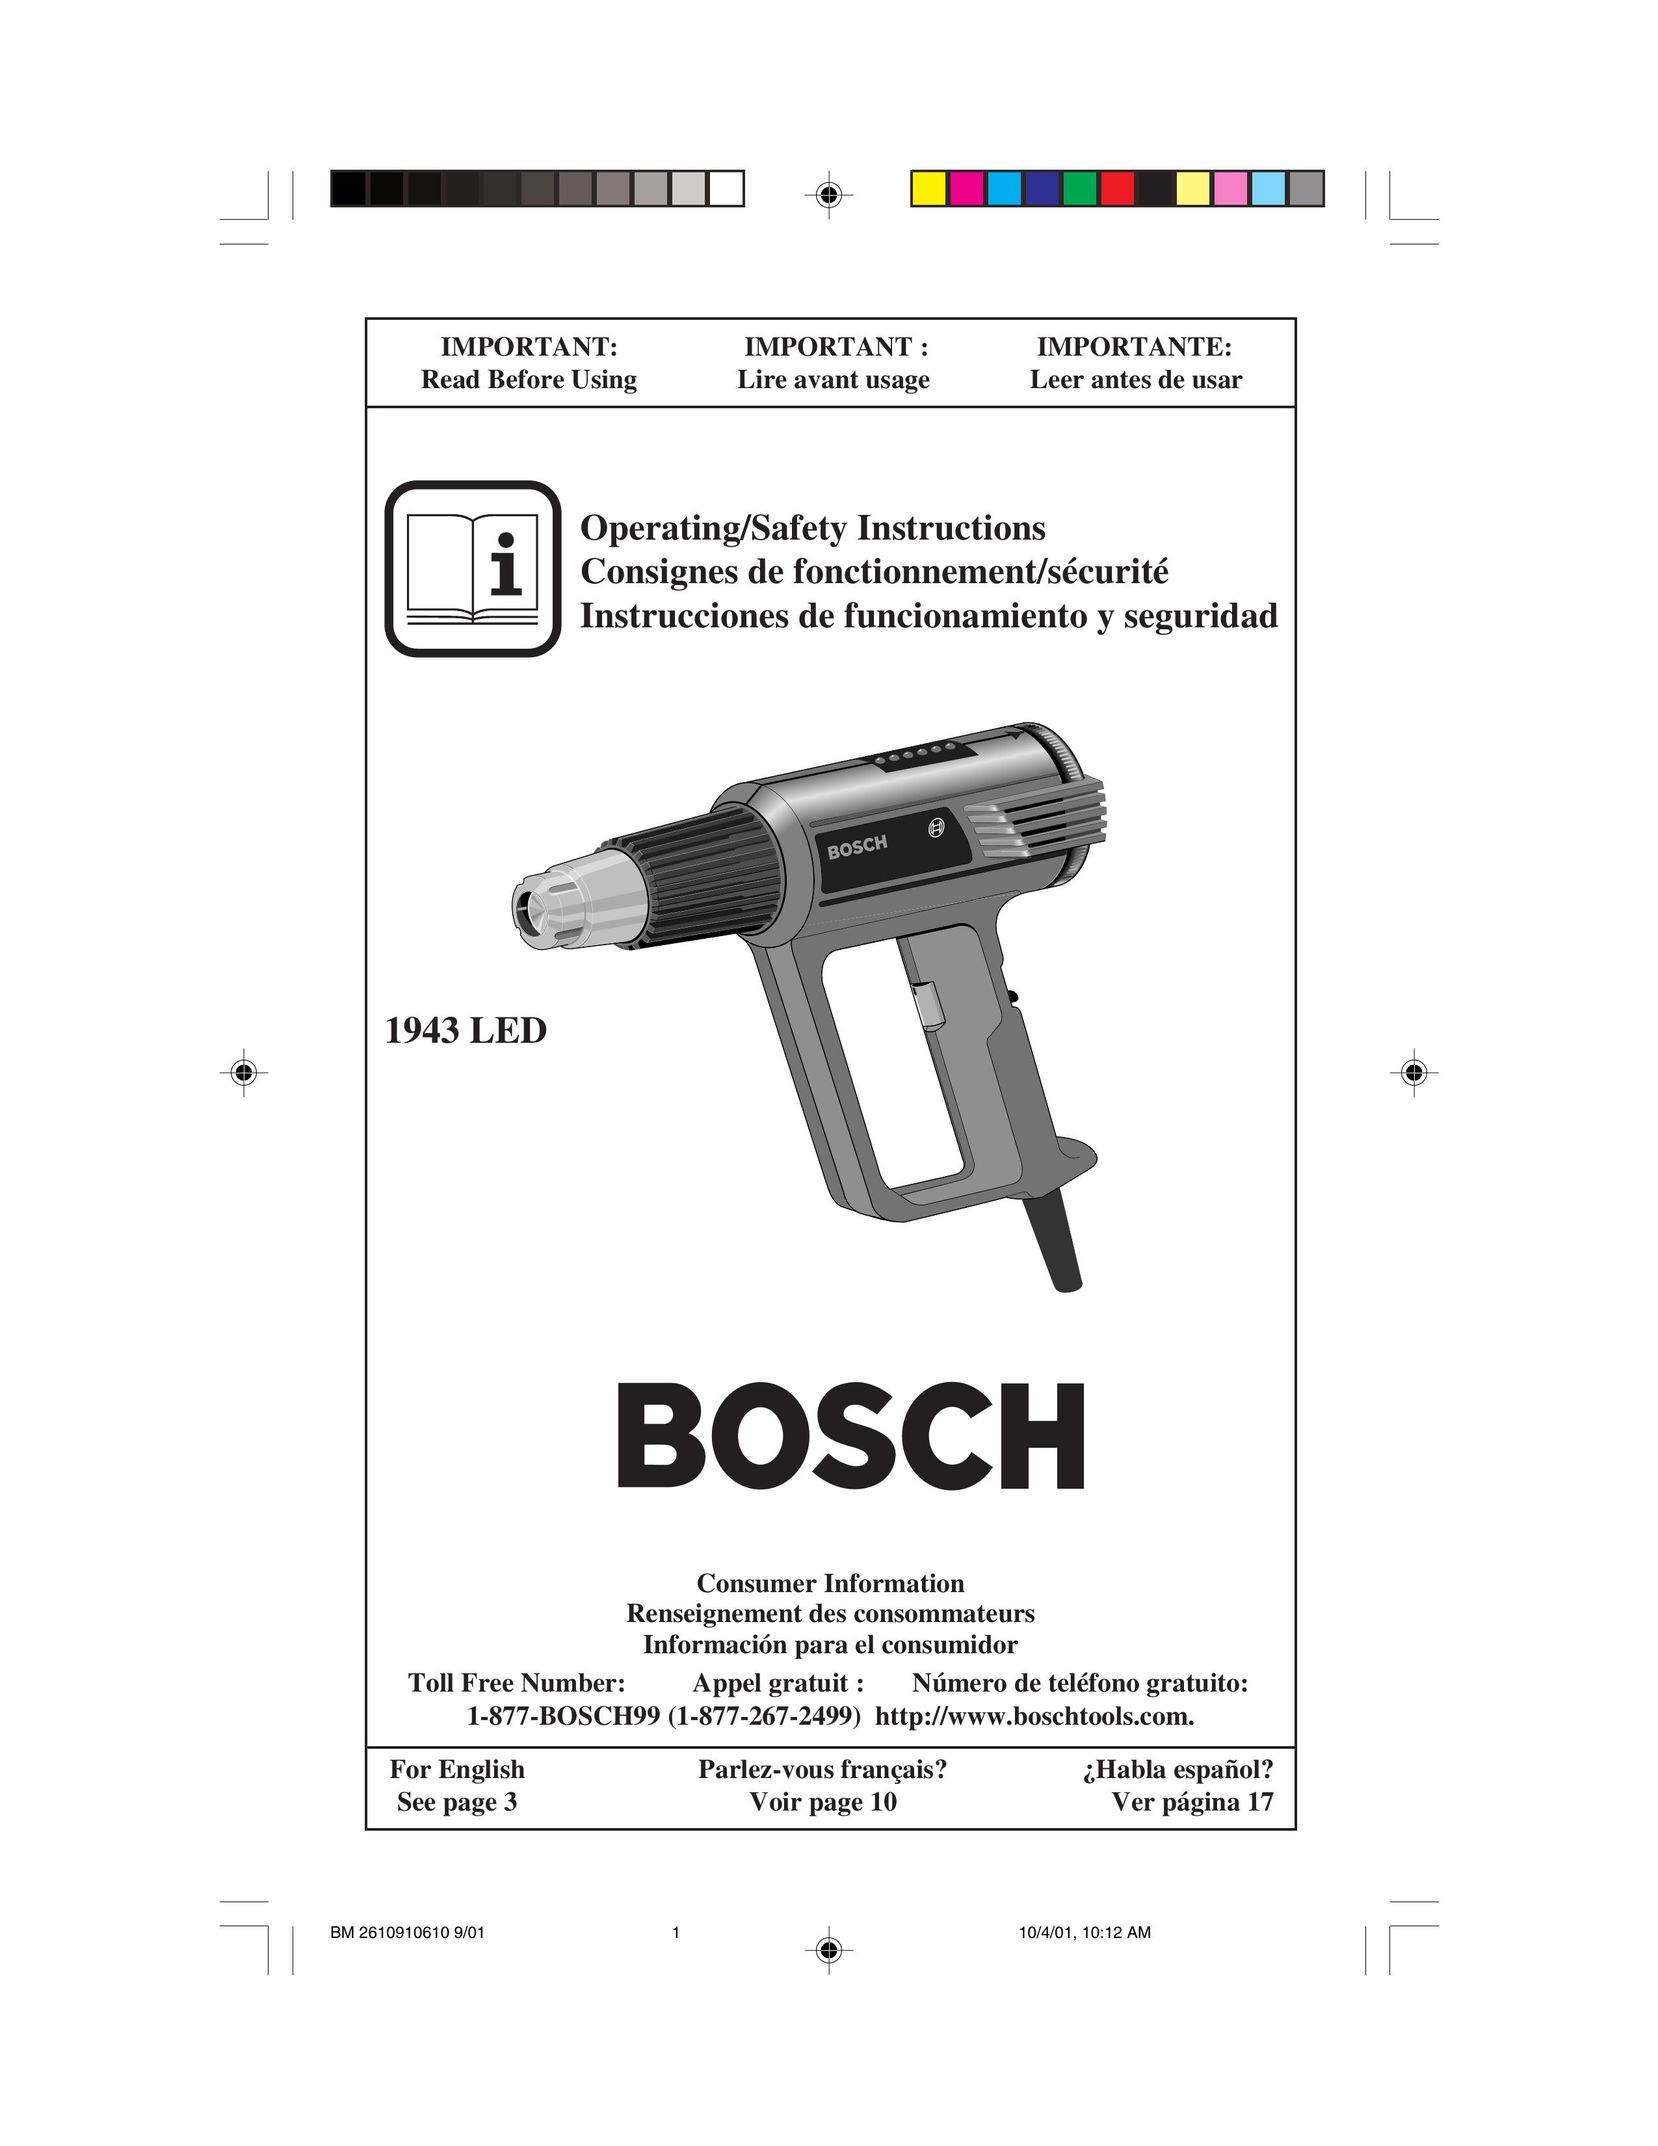 Bosch Power Tools 1943 LED Heat Gun User Manual